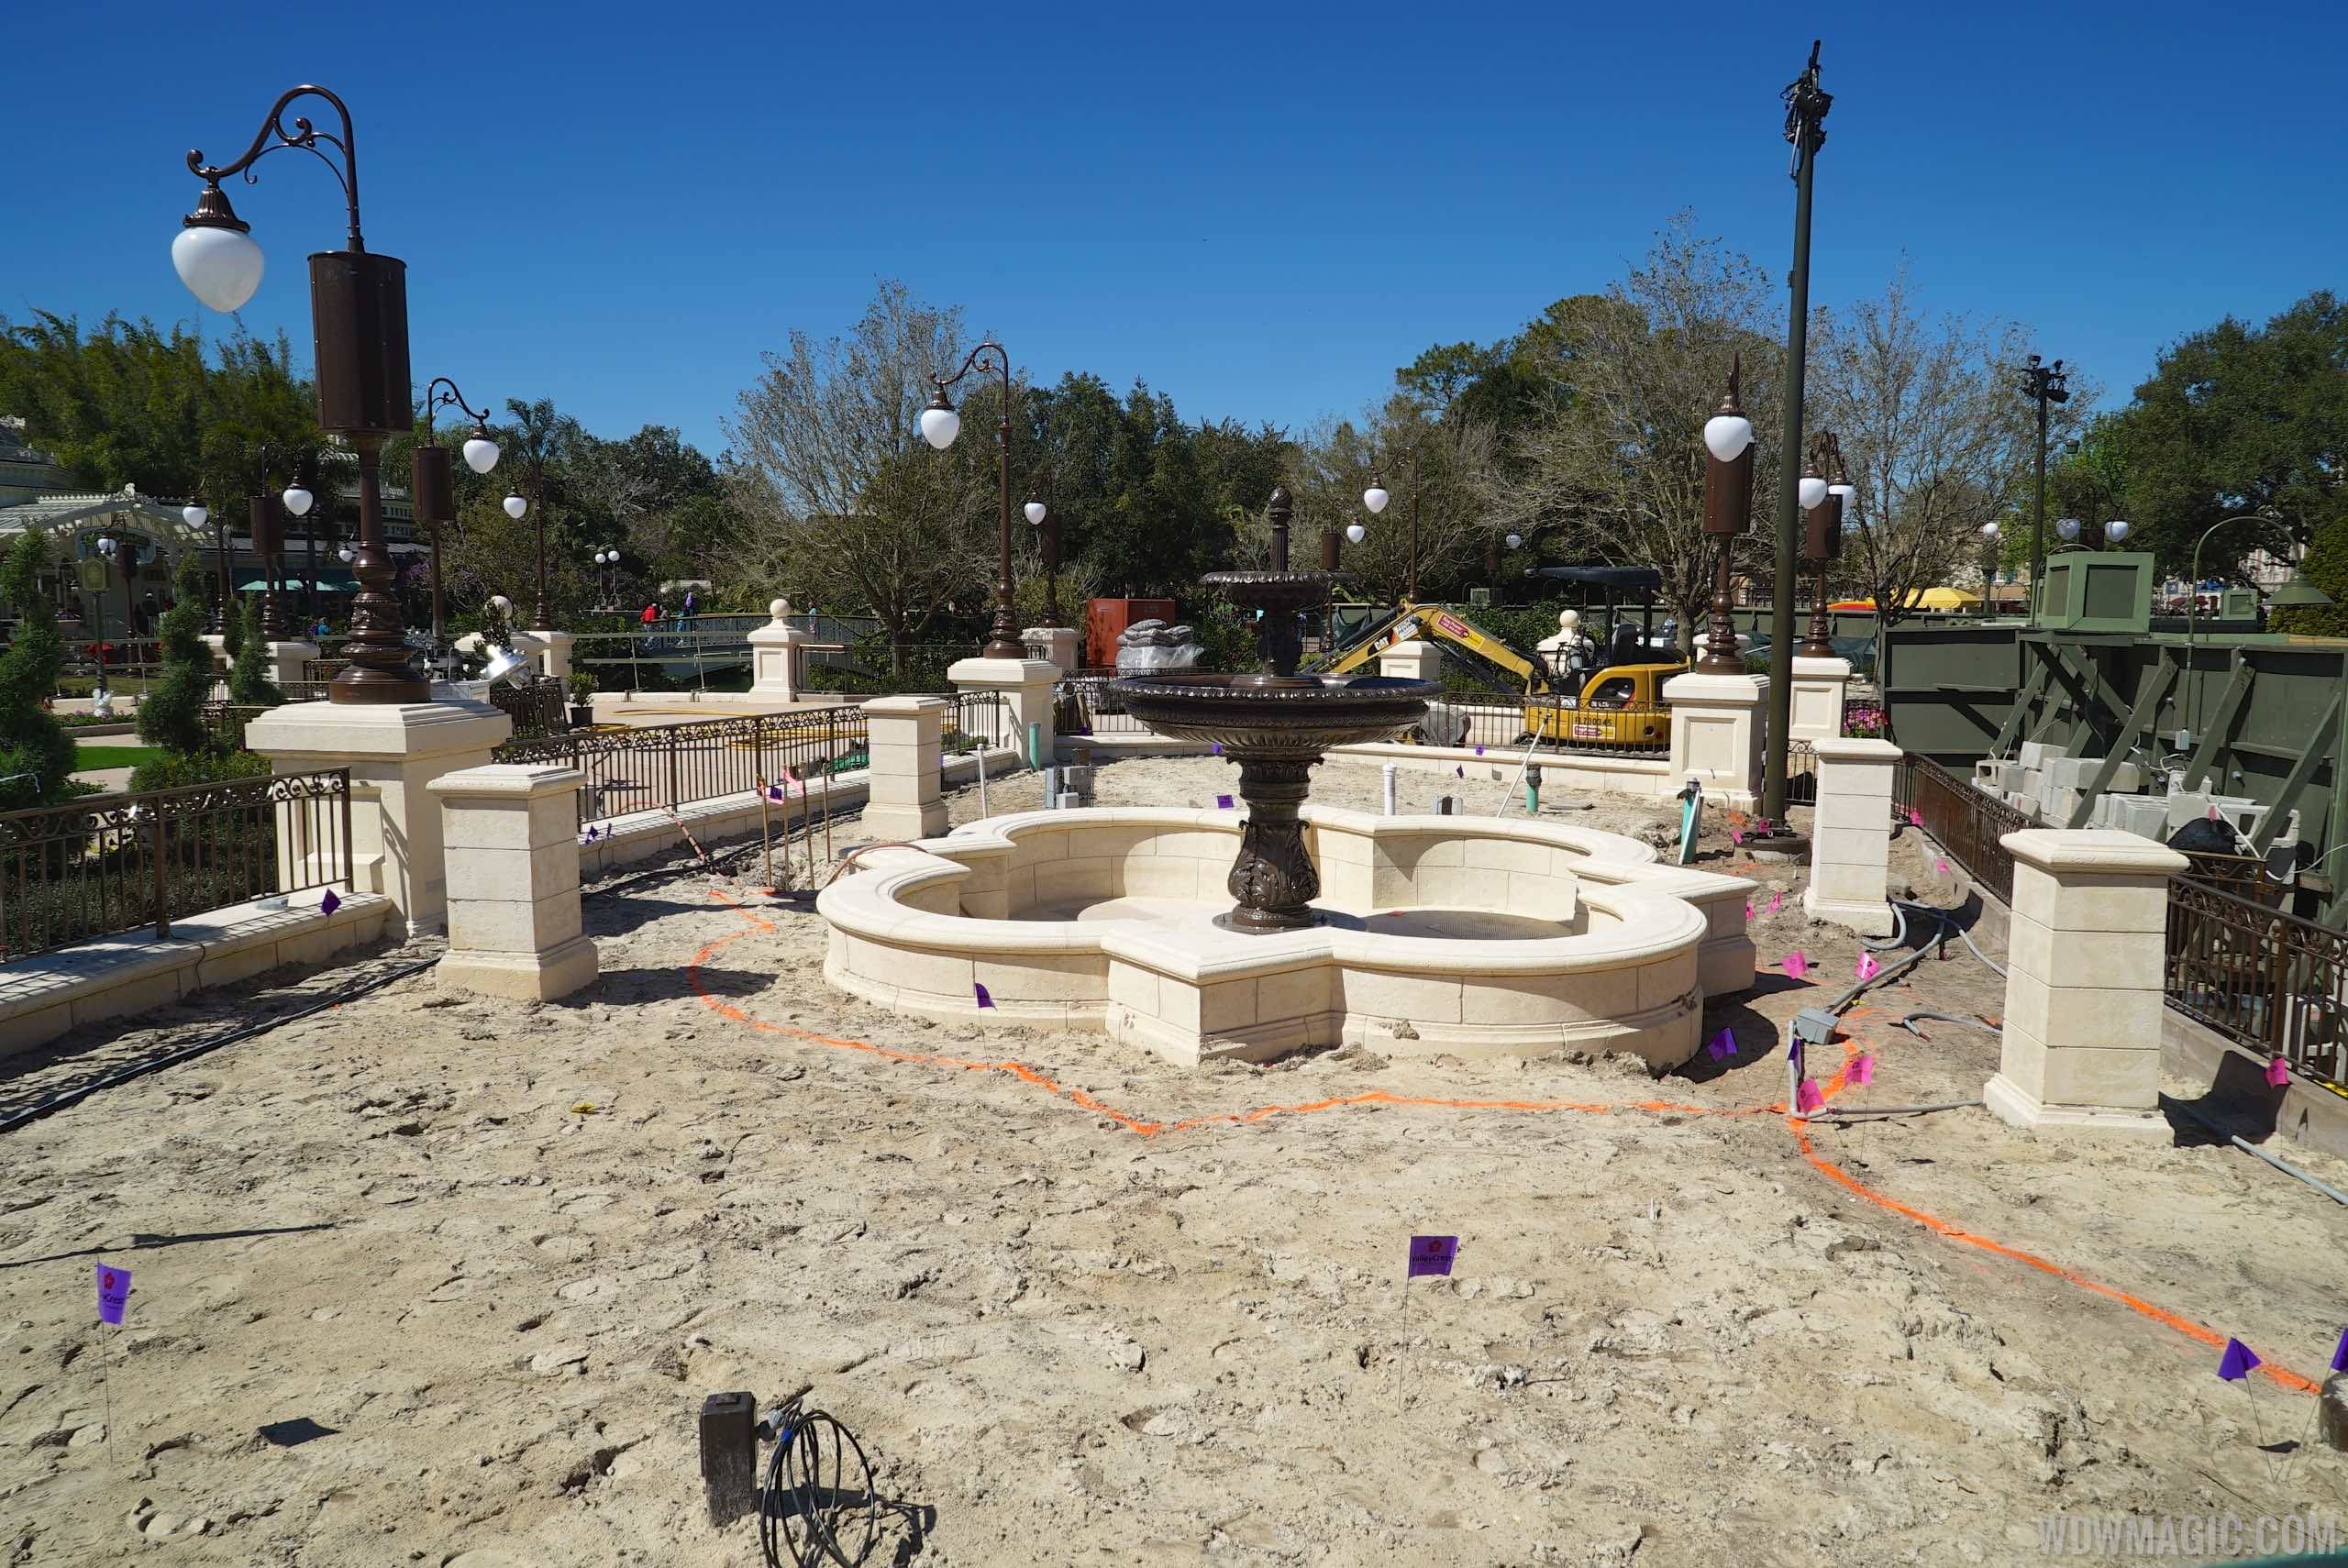 PHOTOS - Latest look at the Magic Kingdom's Main Street Plaza Gardens construction